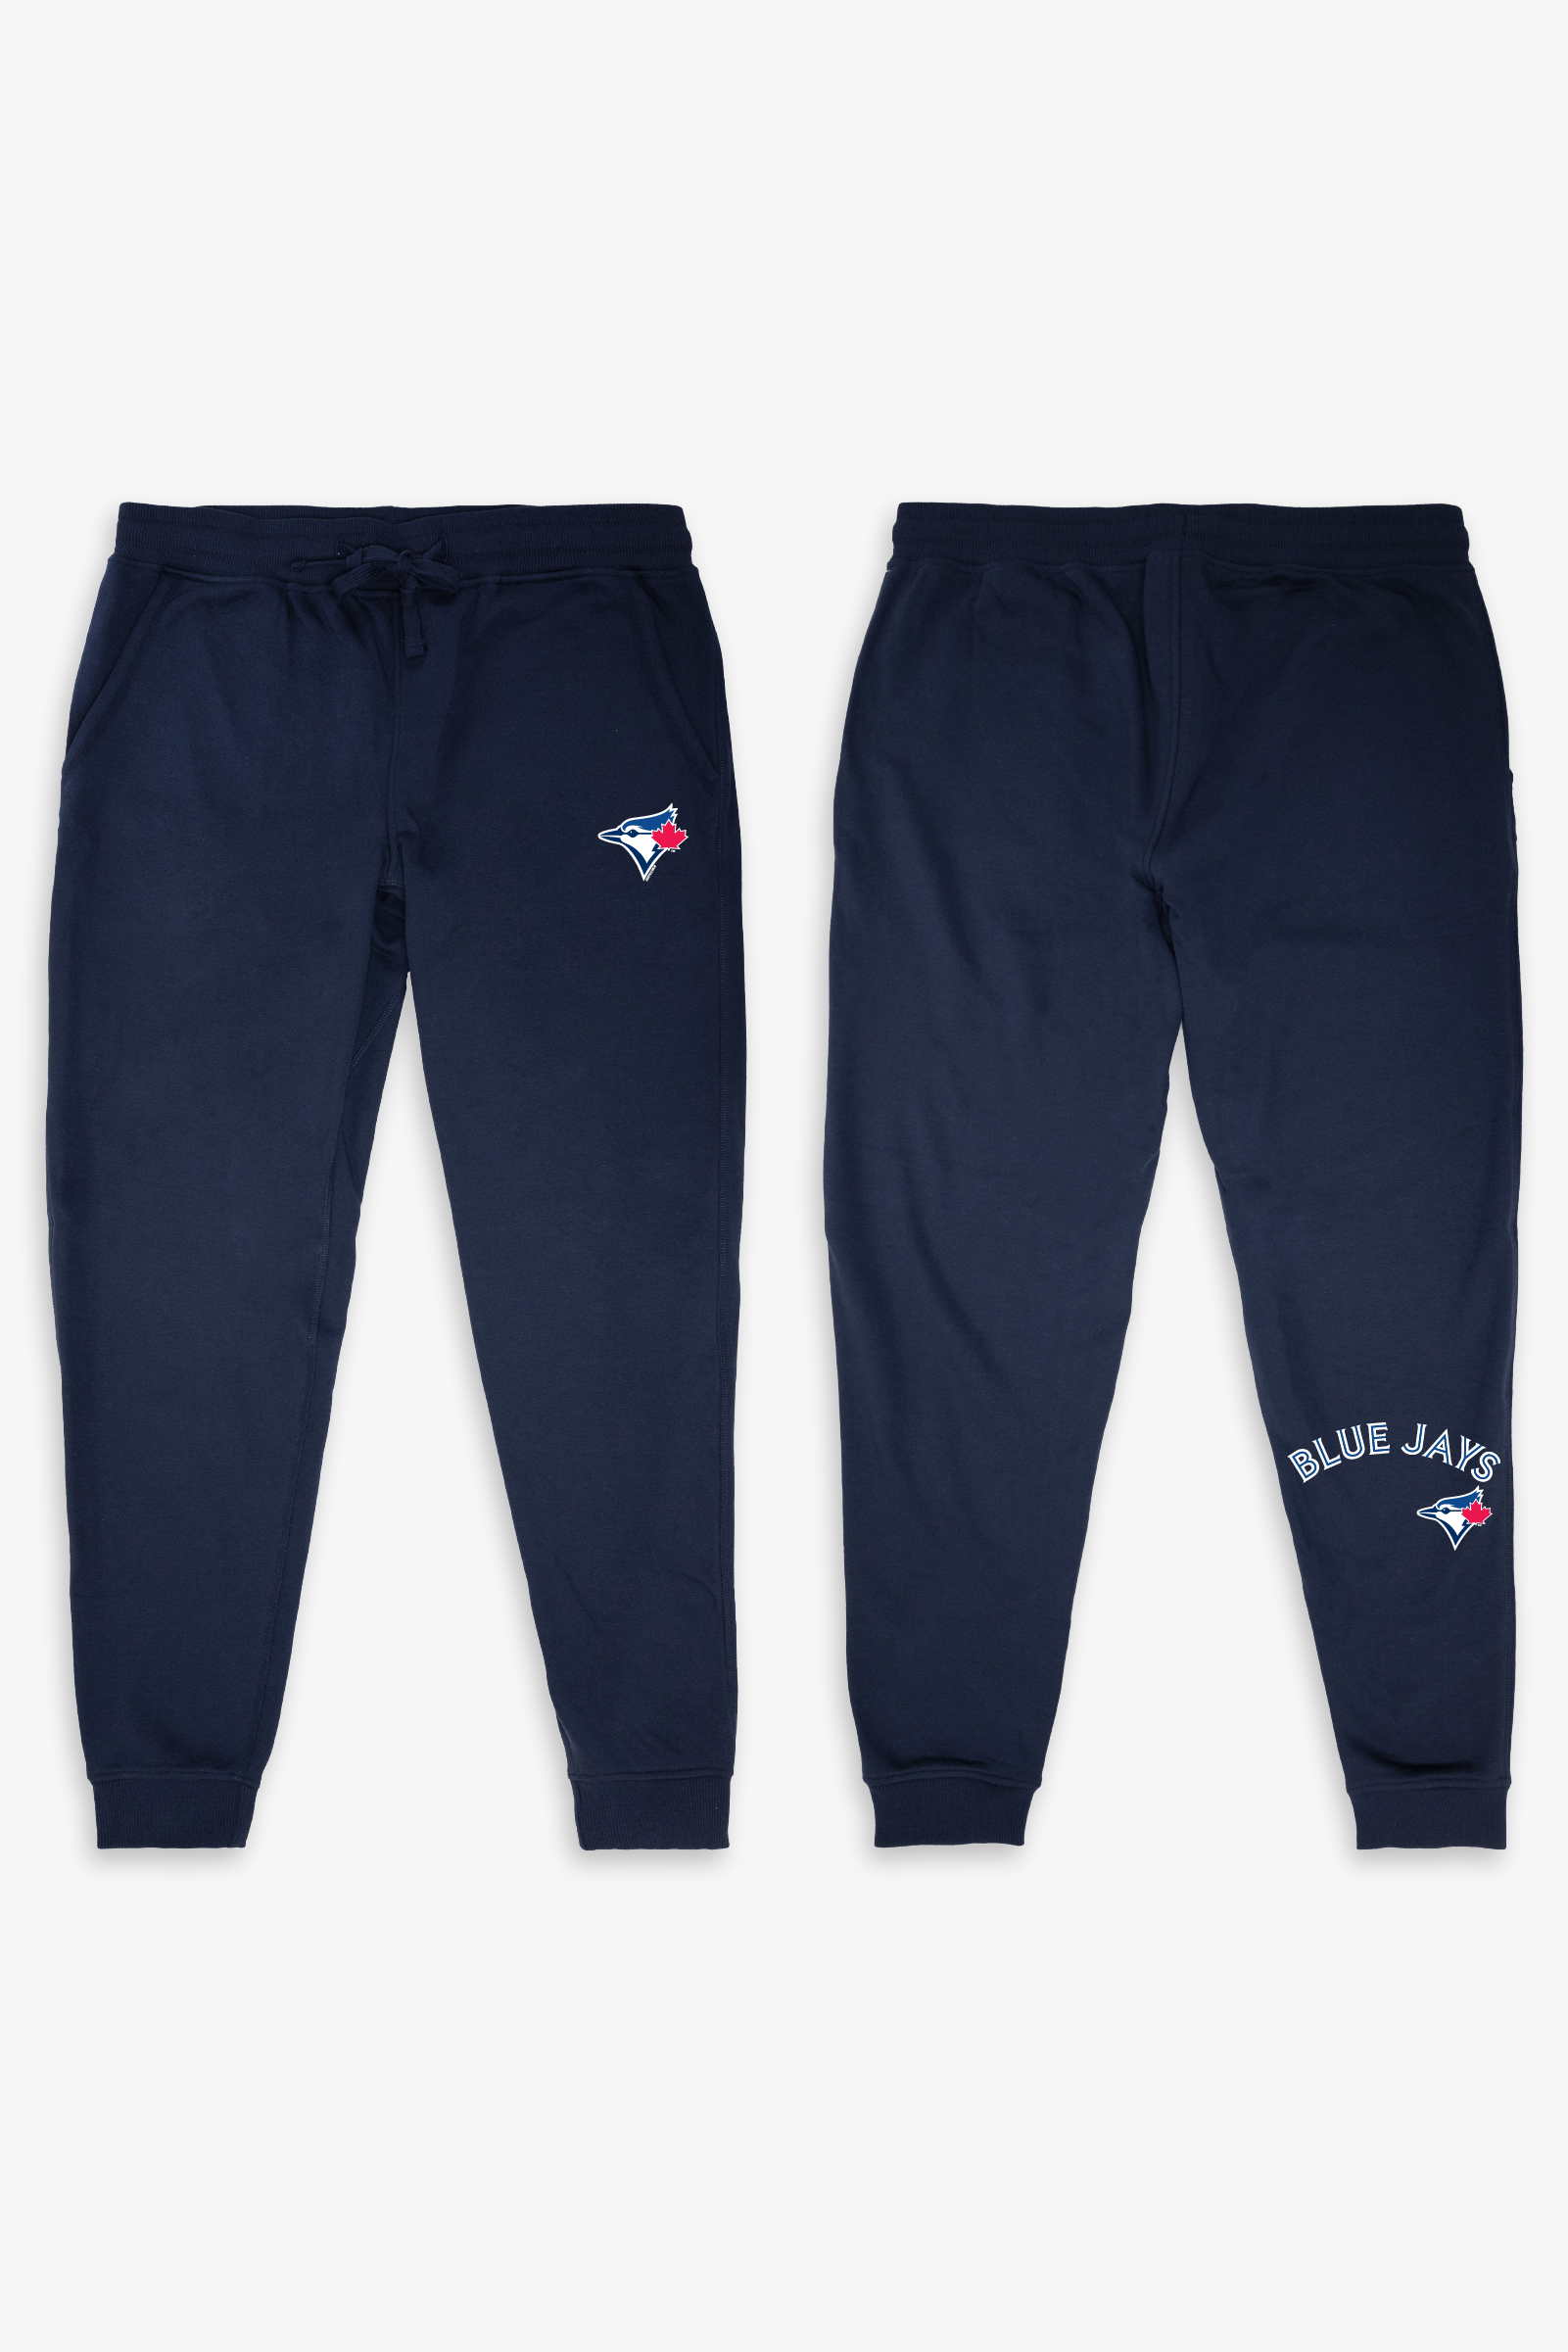 MLB Toronto Blue Jays Navy Blue Adult Lounge Pants